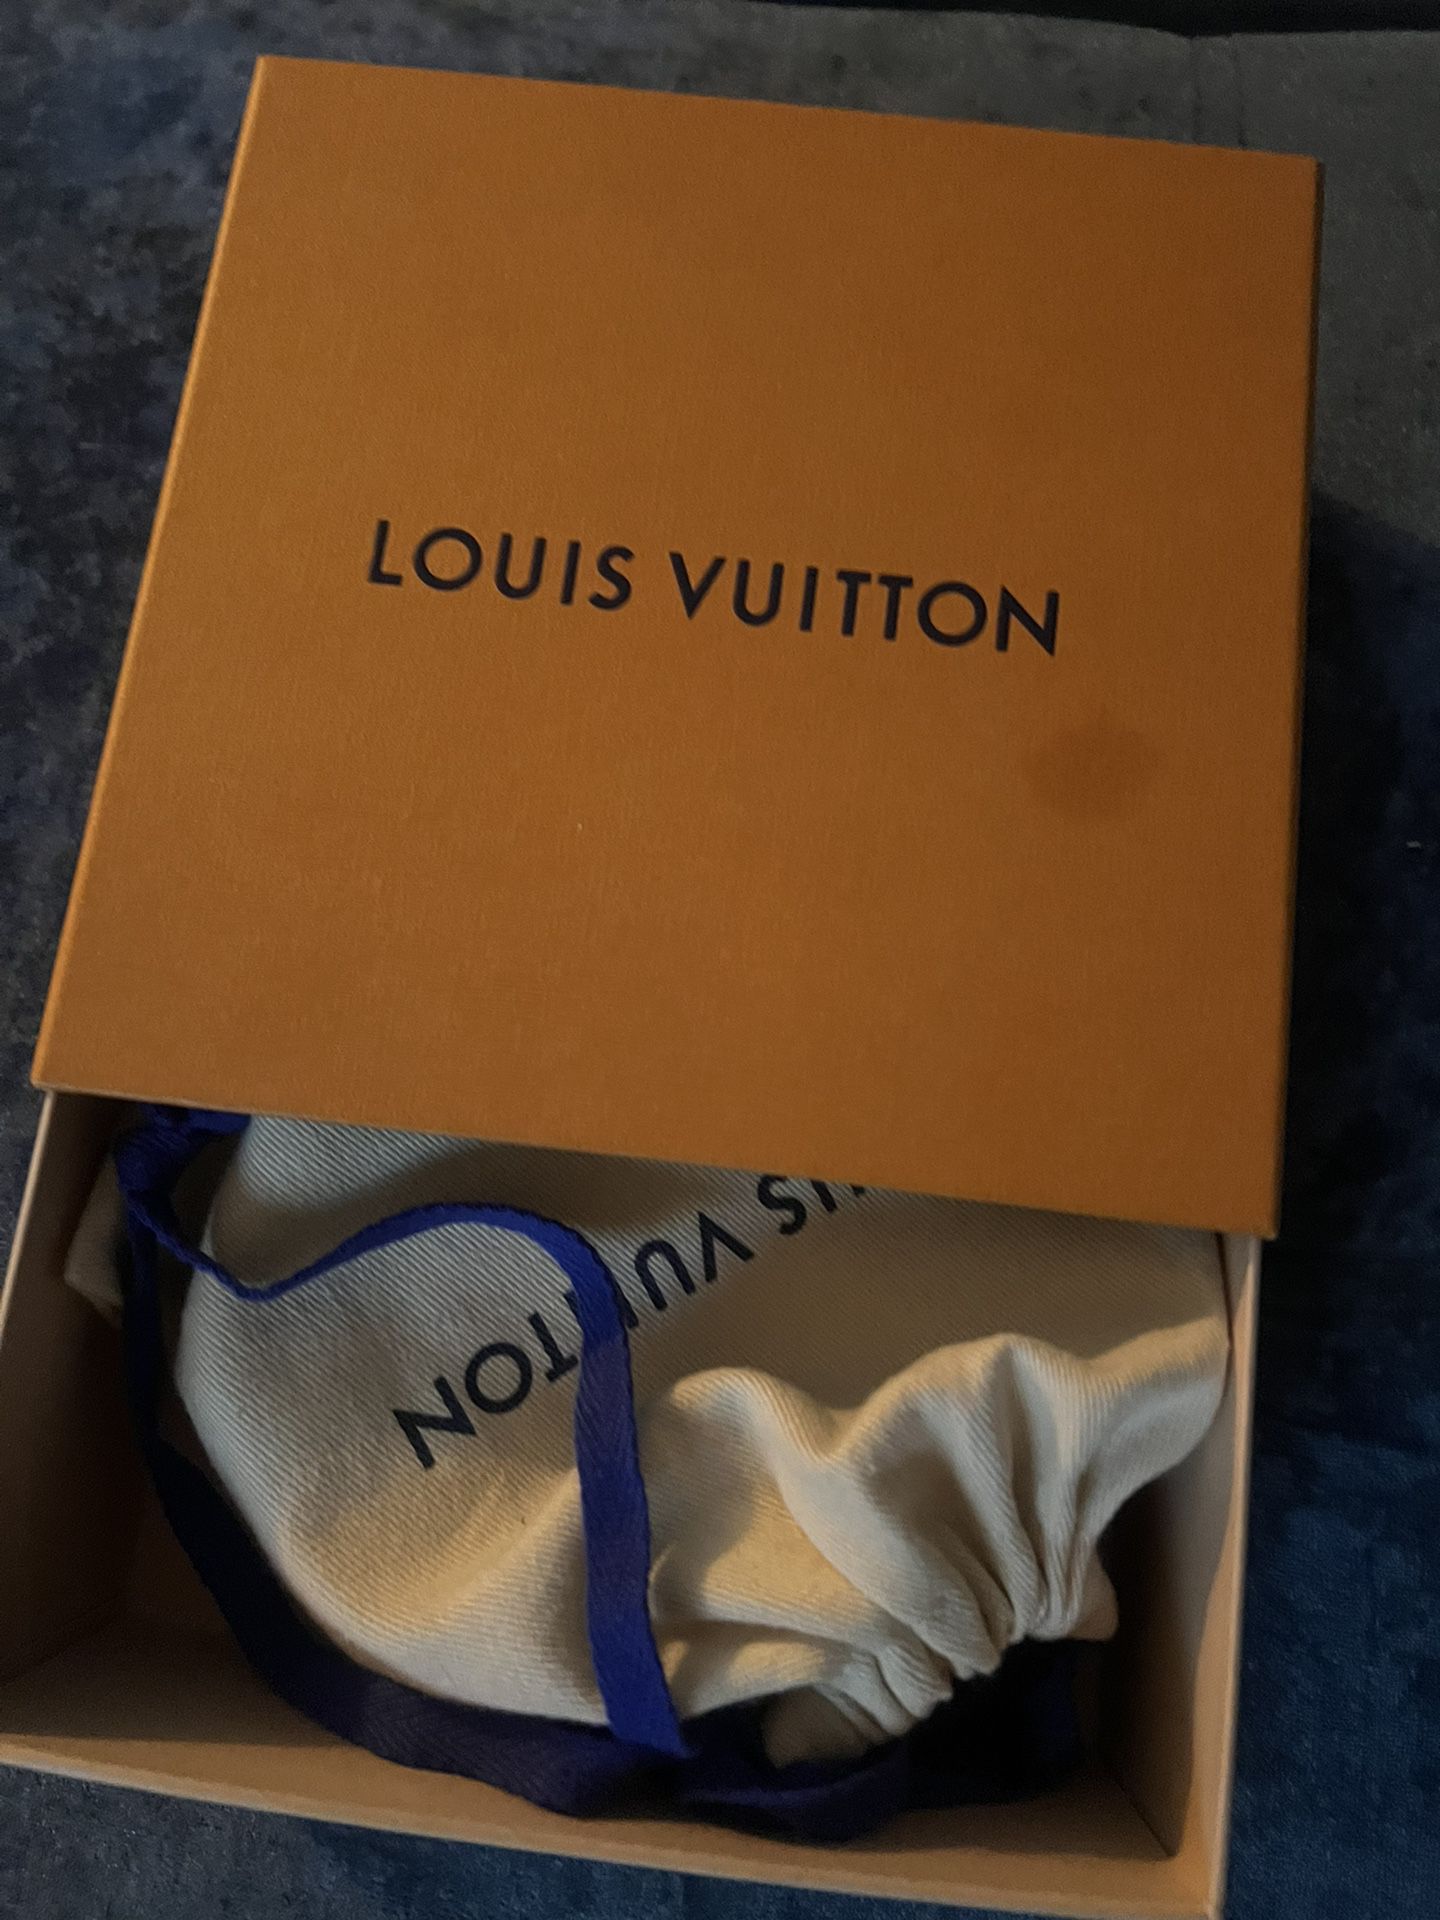 Louis Vuitton Unisex Belt 